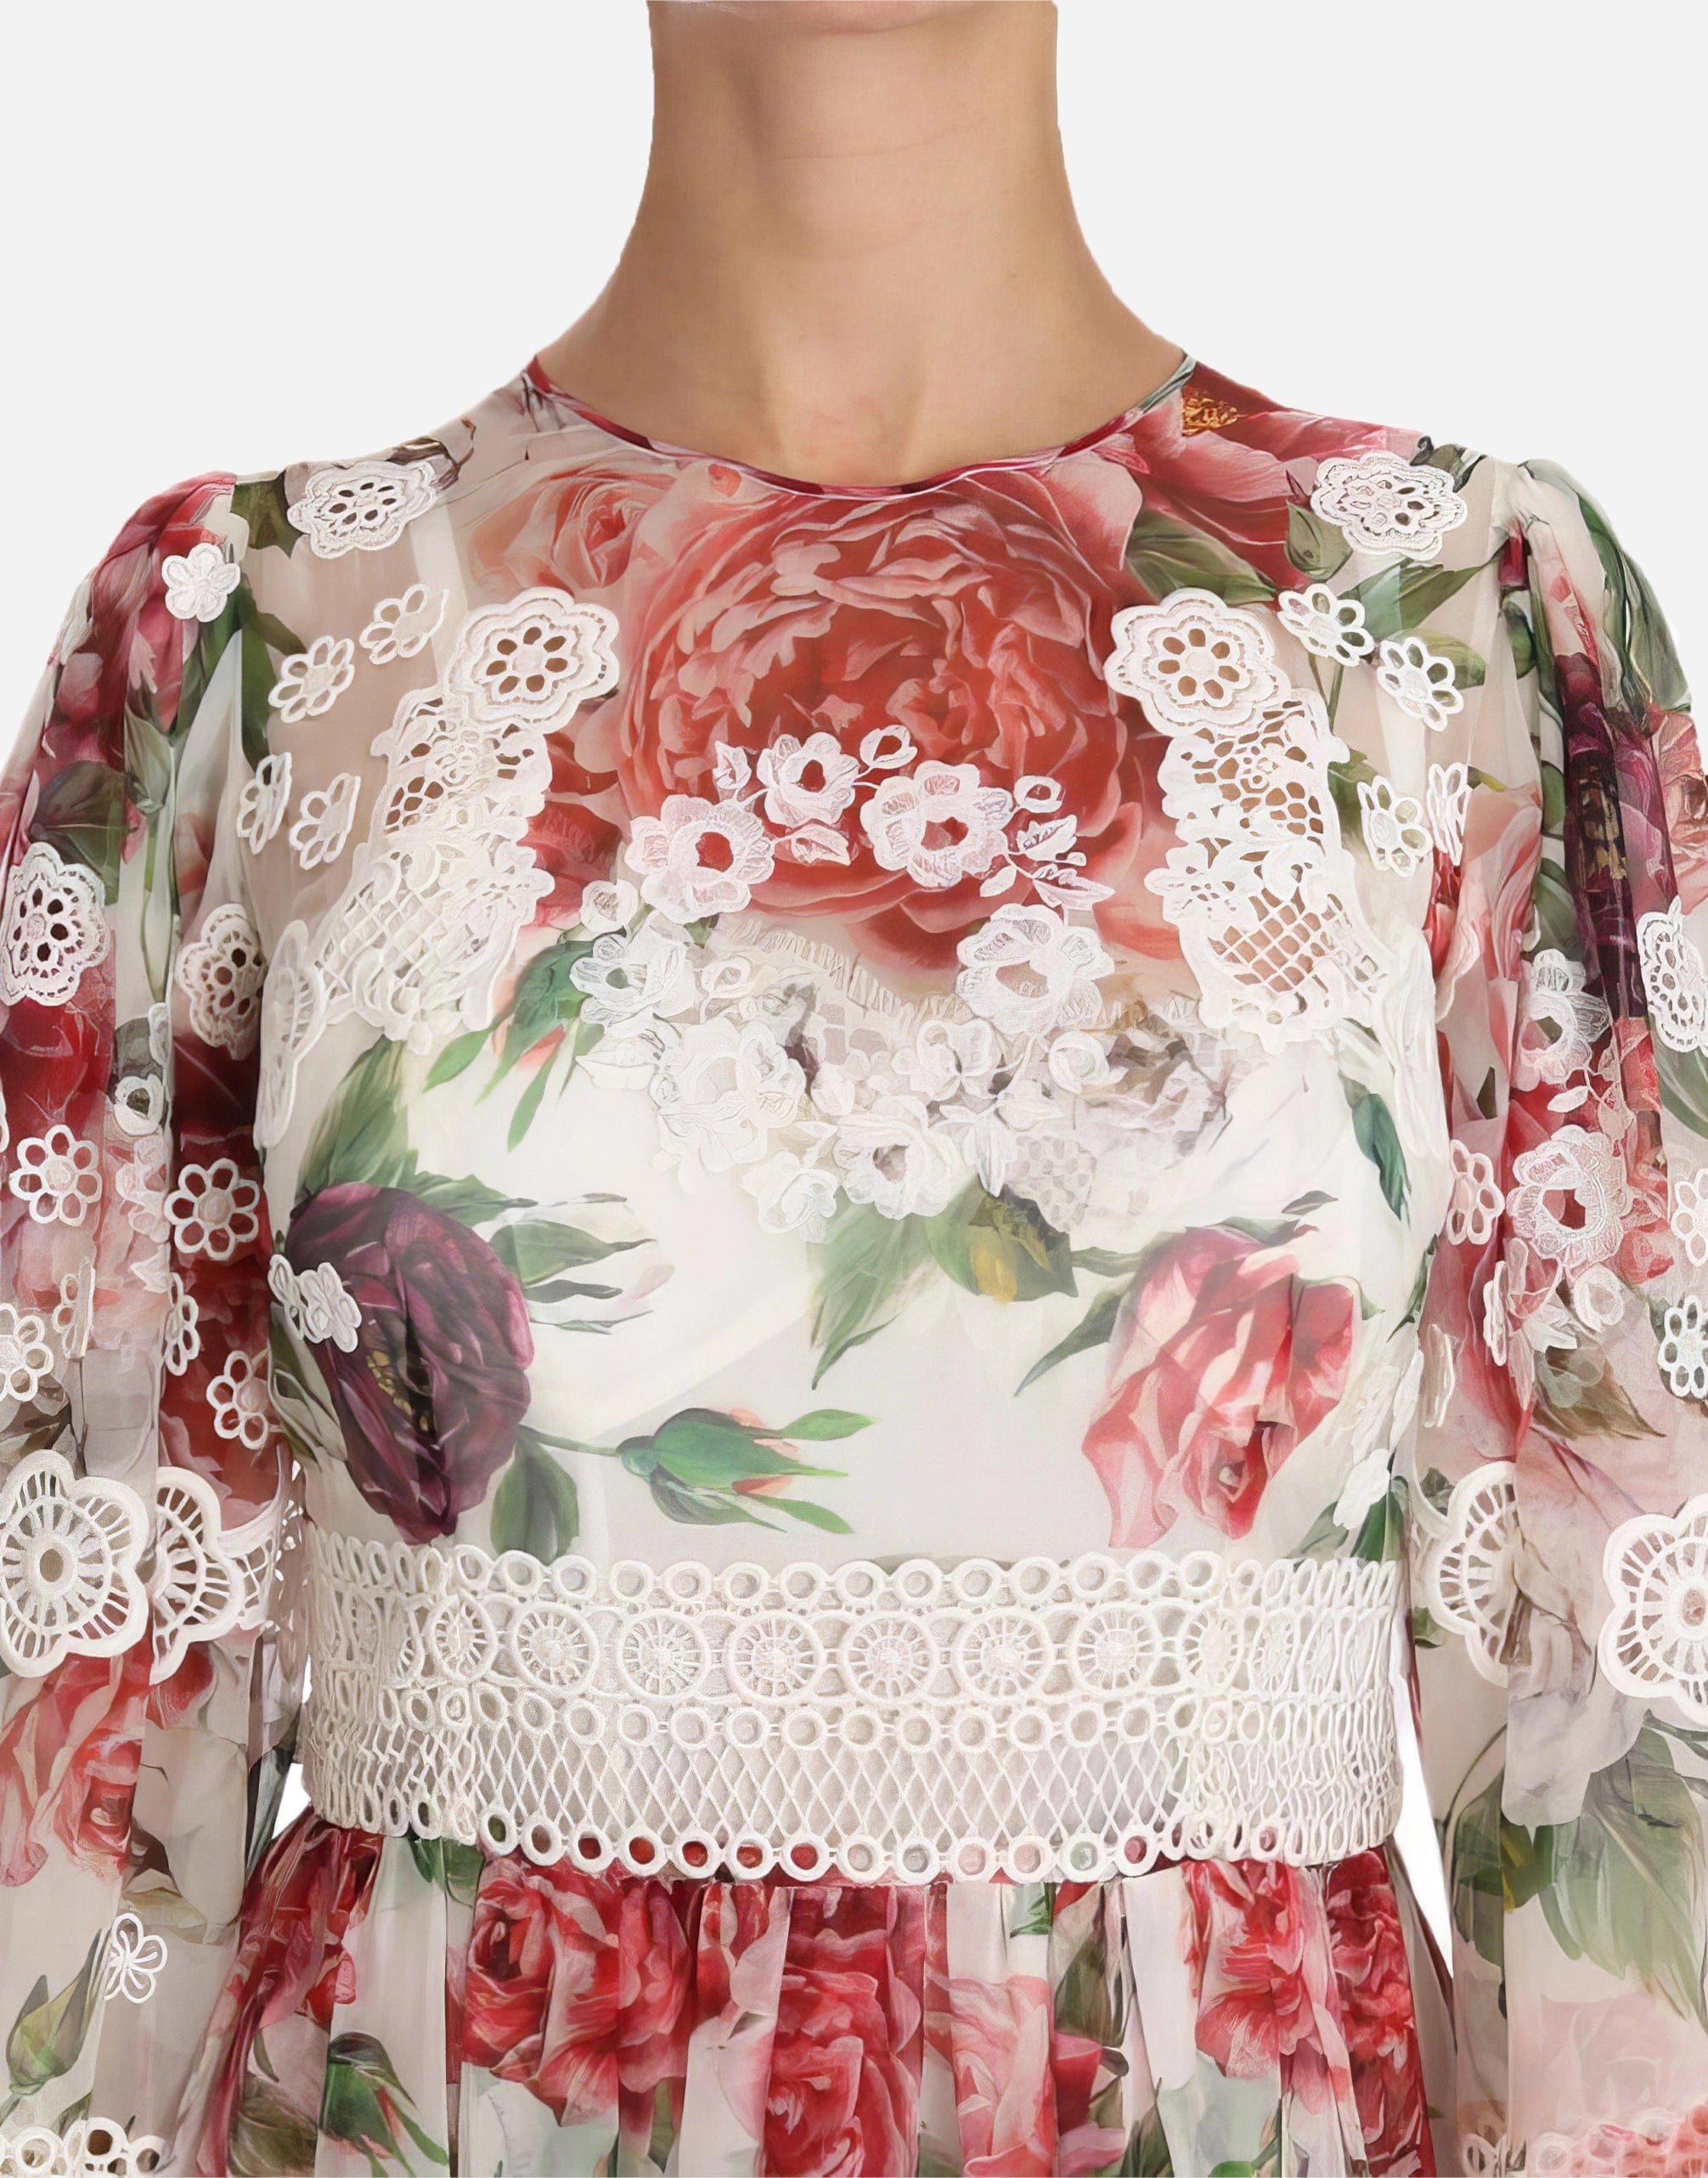 Dolce & Gabbana Peony And Rose-Print Chiffon Gown